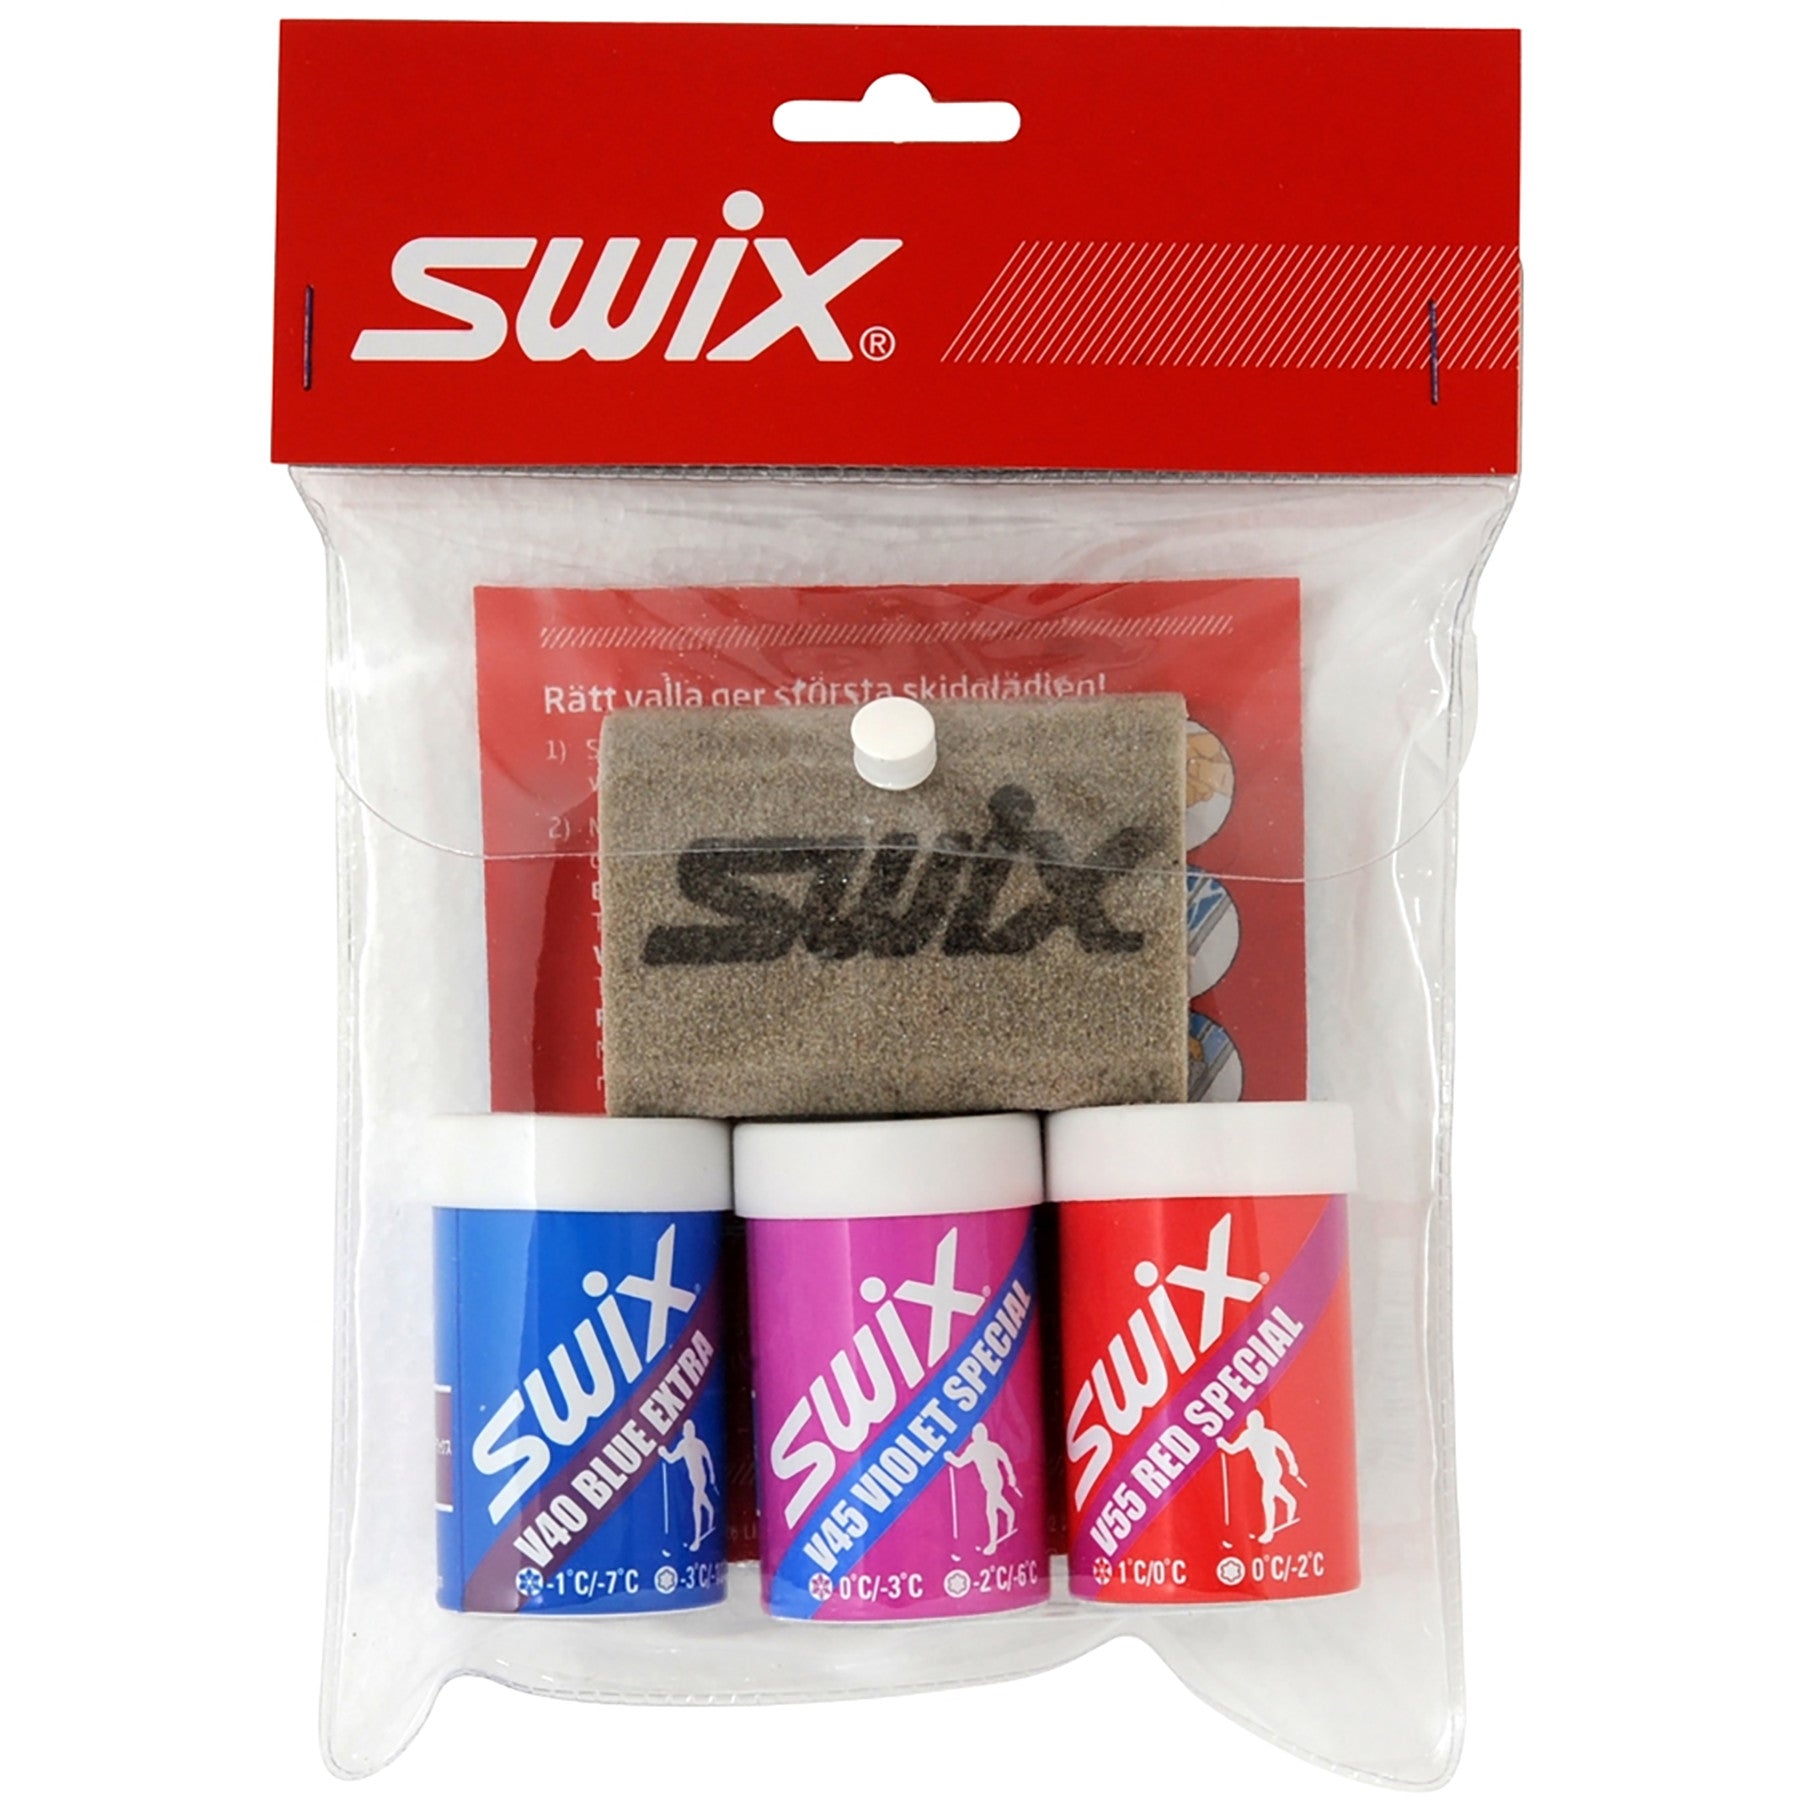 Swix Gunde Pack